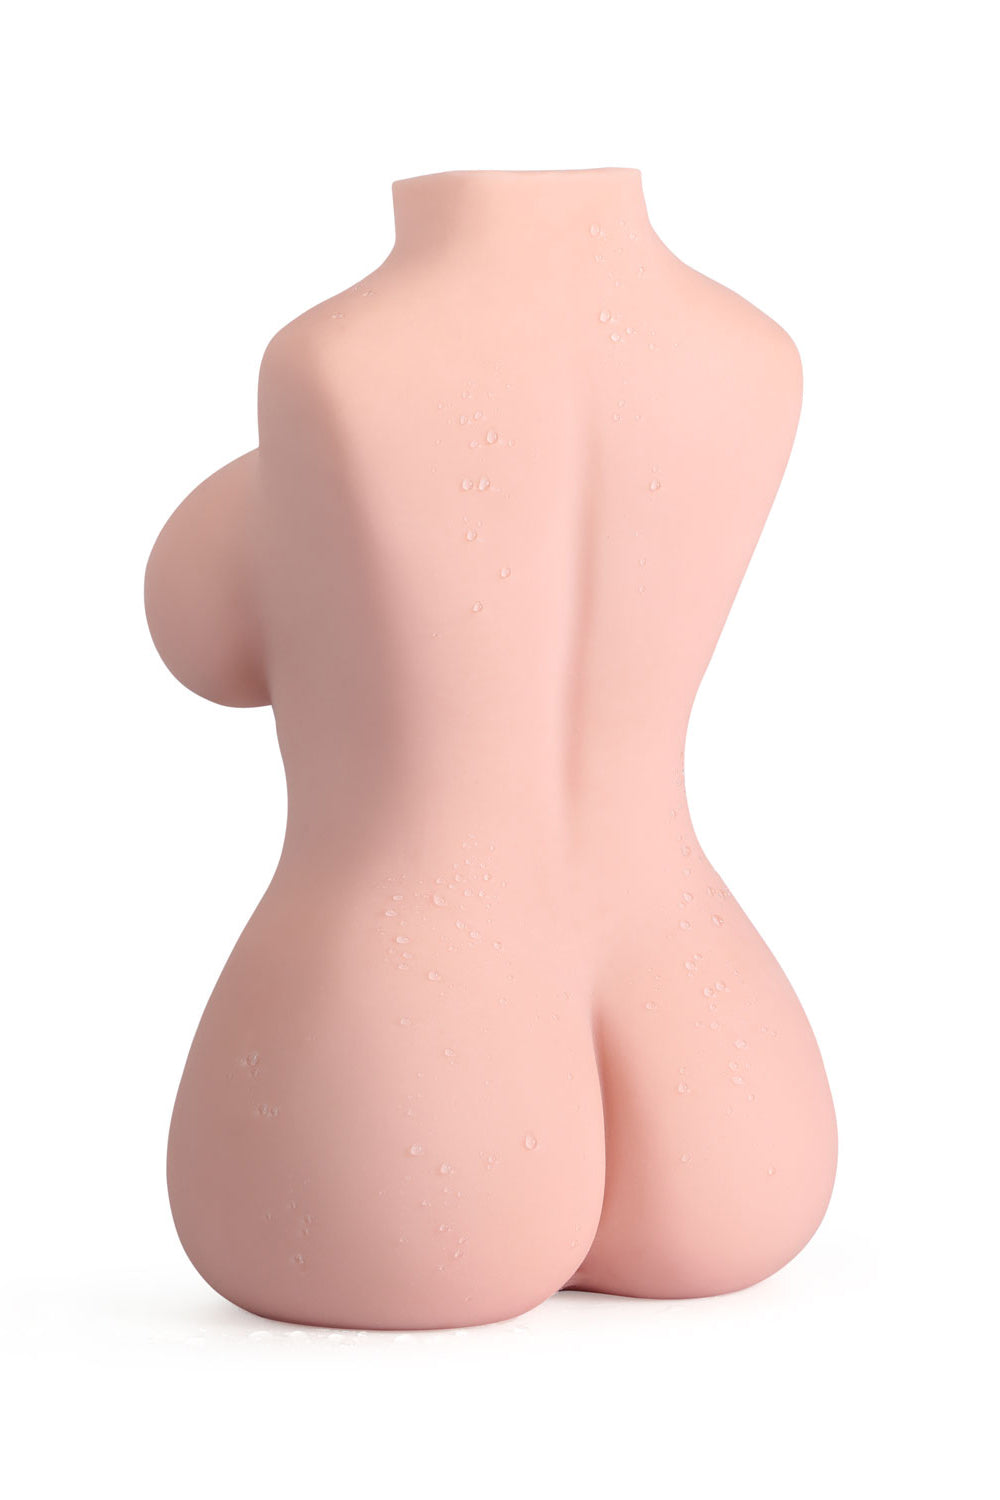 US Stock - 11 lbs Realistic Sex Torso Doll TPE Adult Love Doll Torso Half Body Sex Doll for Man